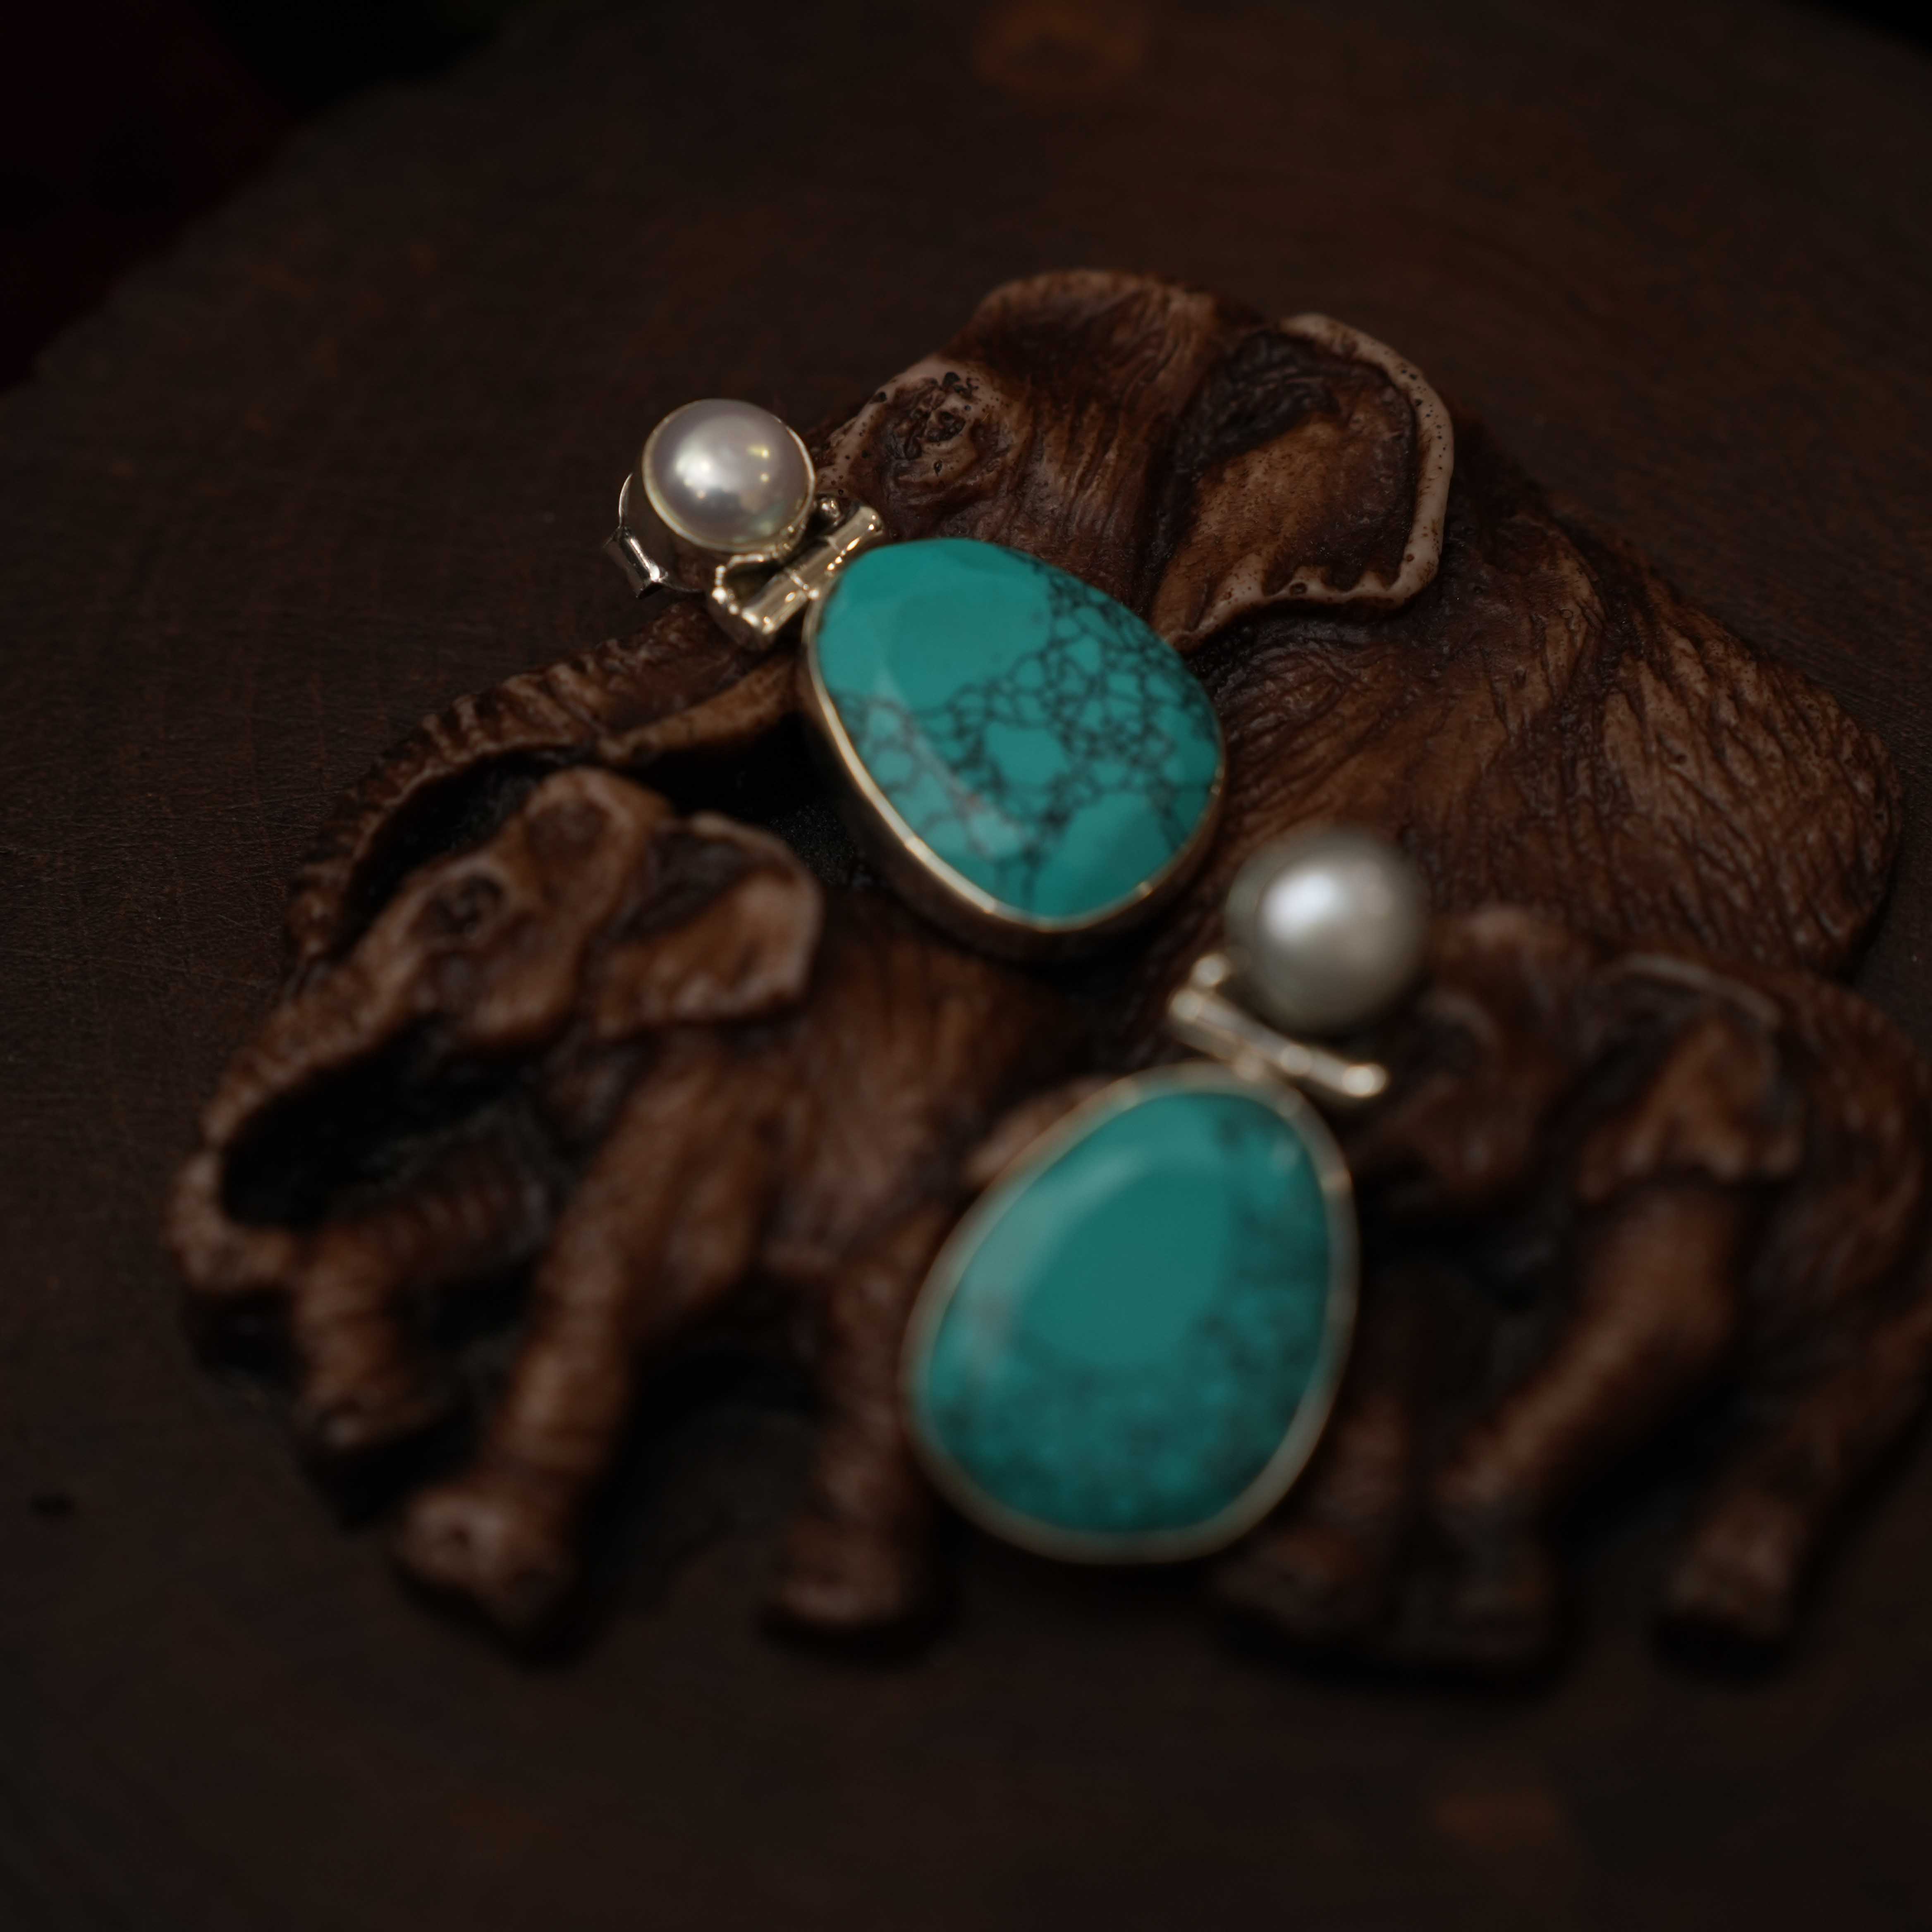 Rushmitha 925 Oxidized Silver Earrings - Turquoise